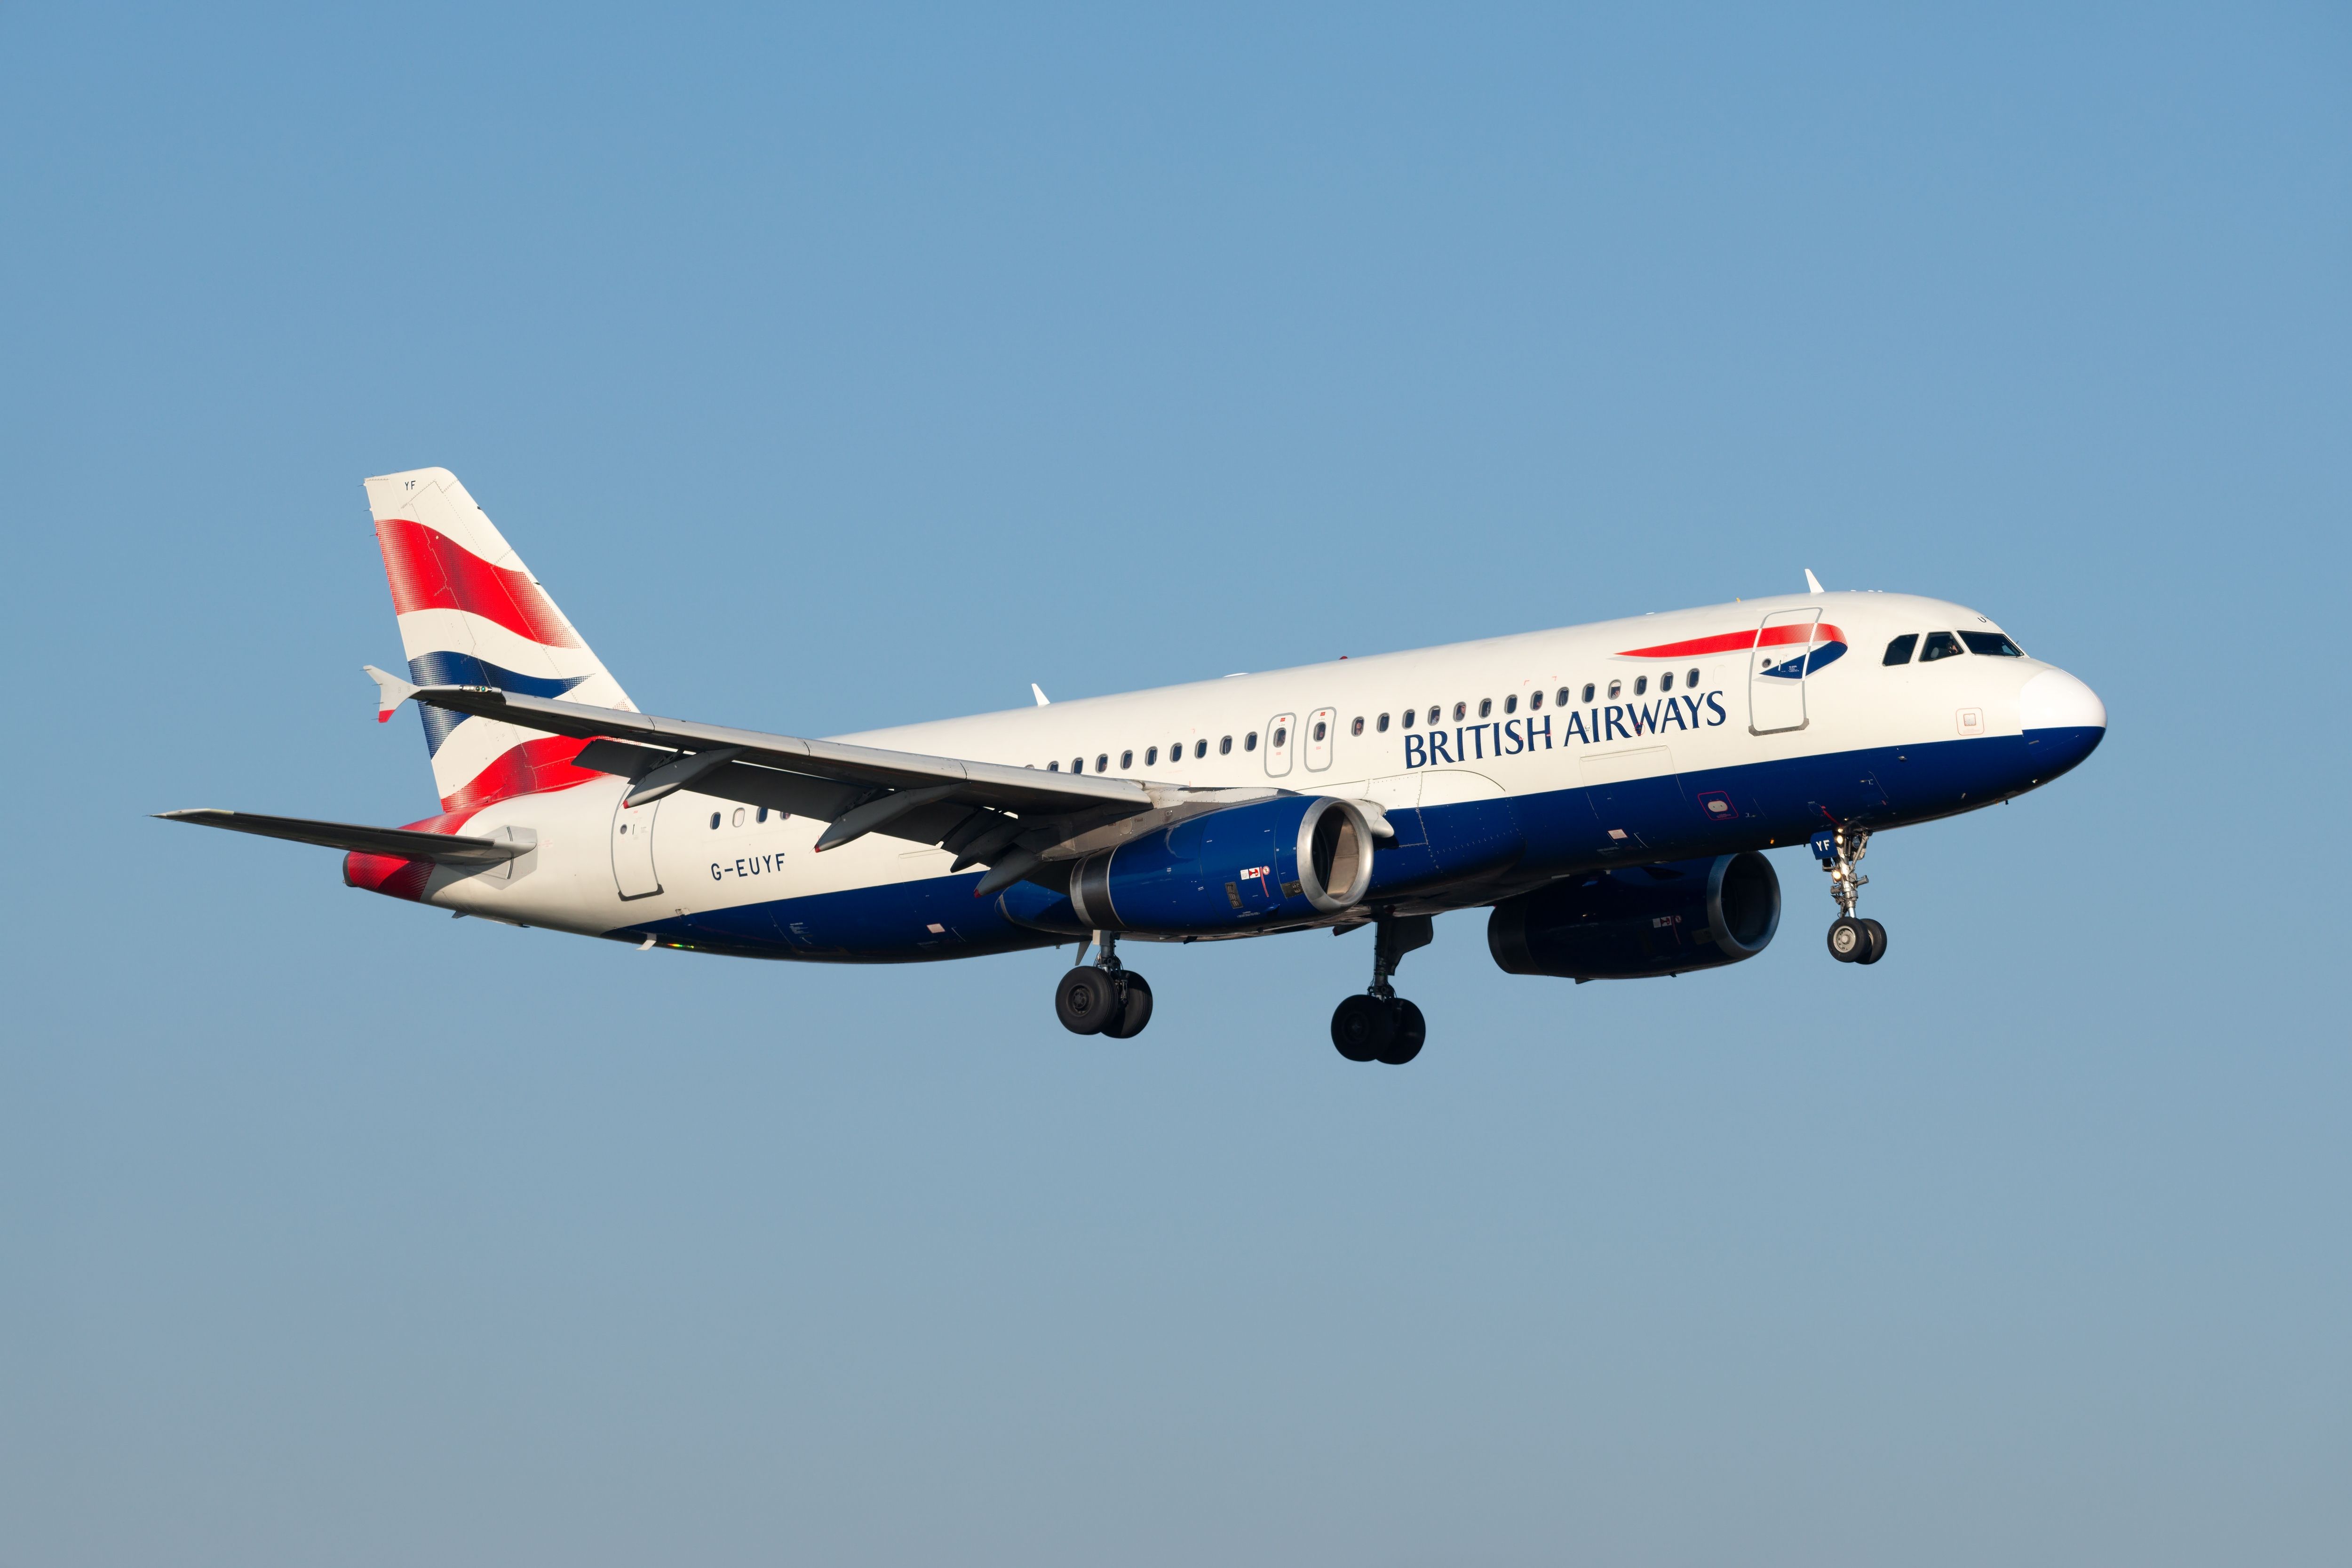 British Airways Airbus A320 Landing In Sunny Conditions